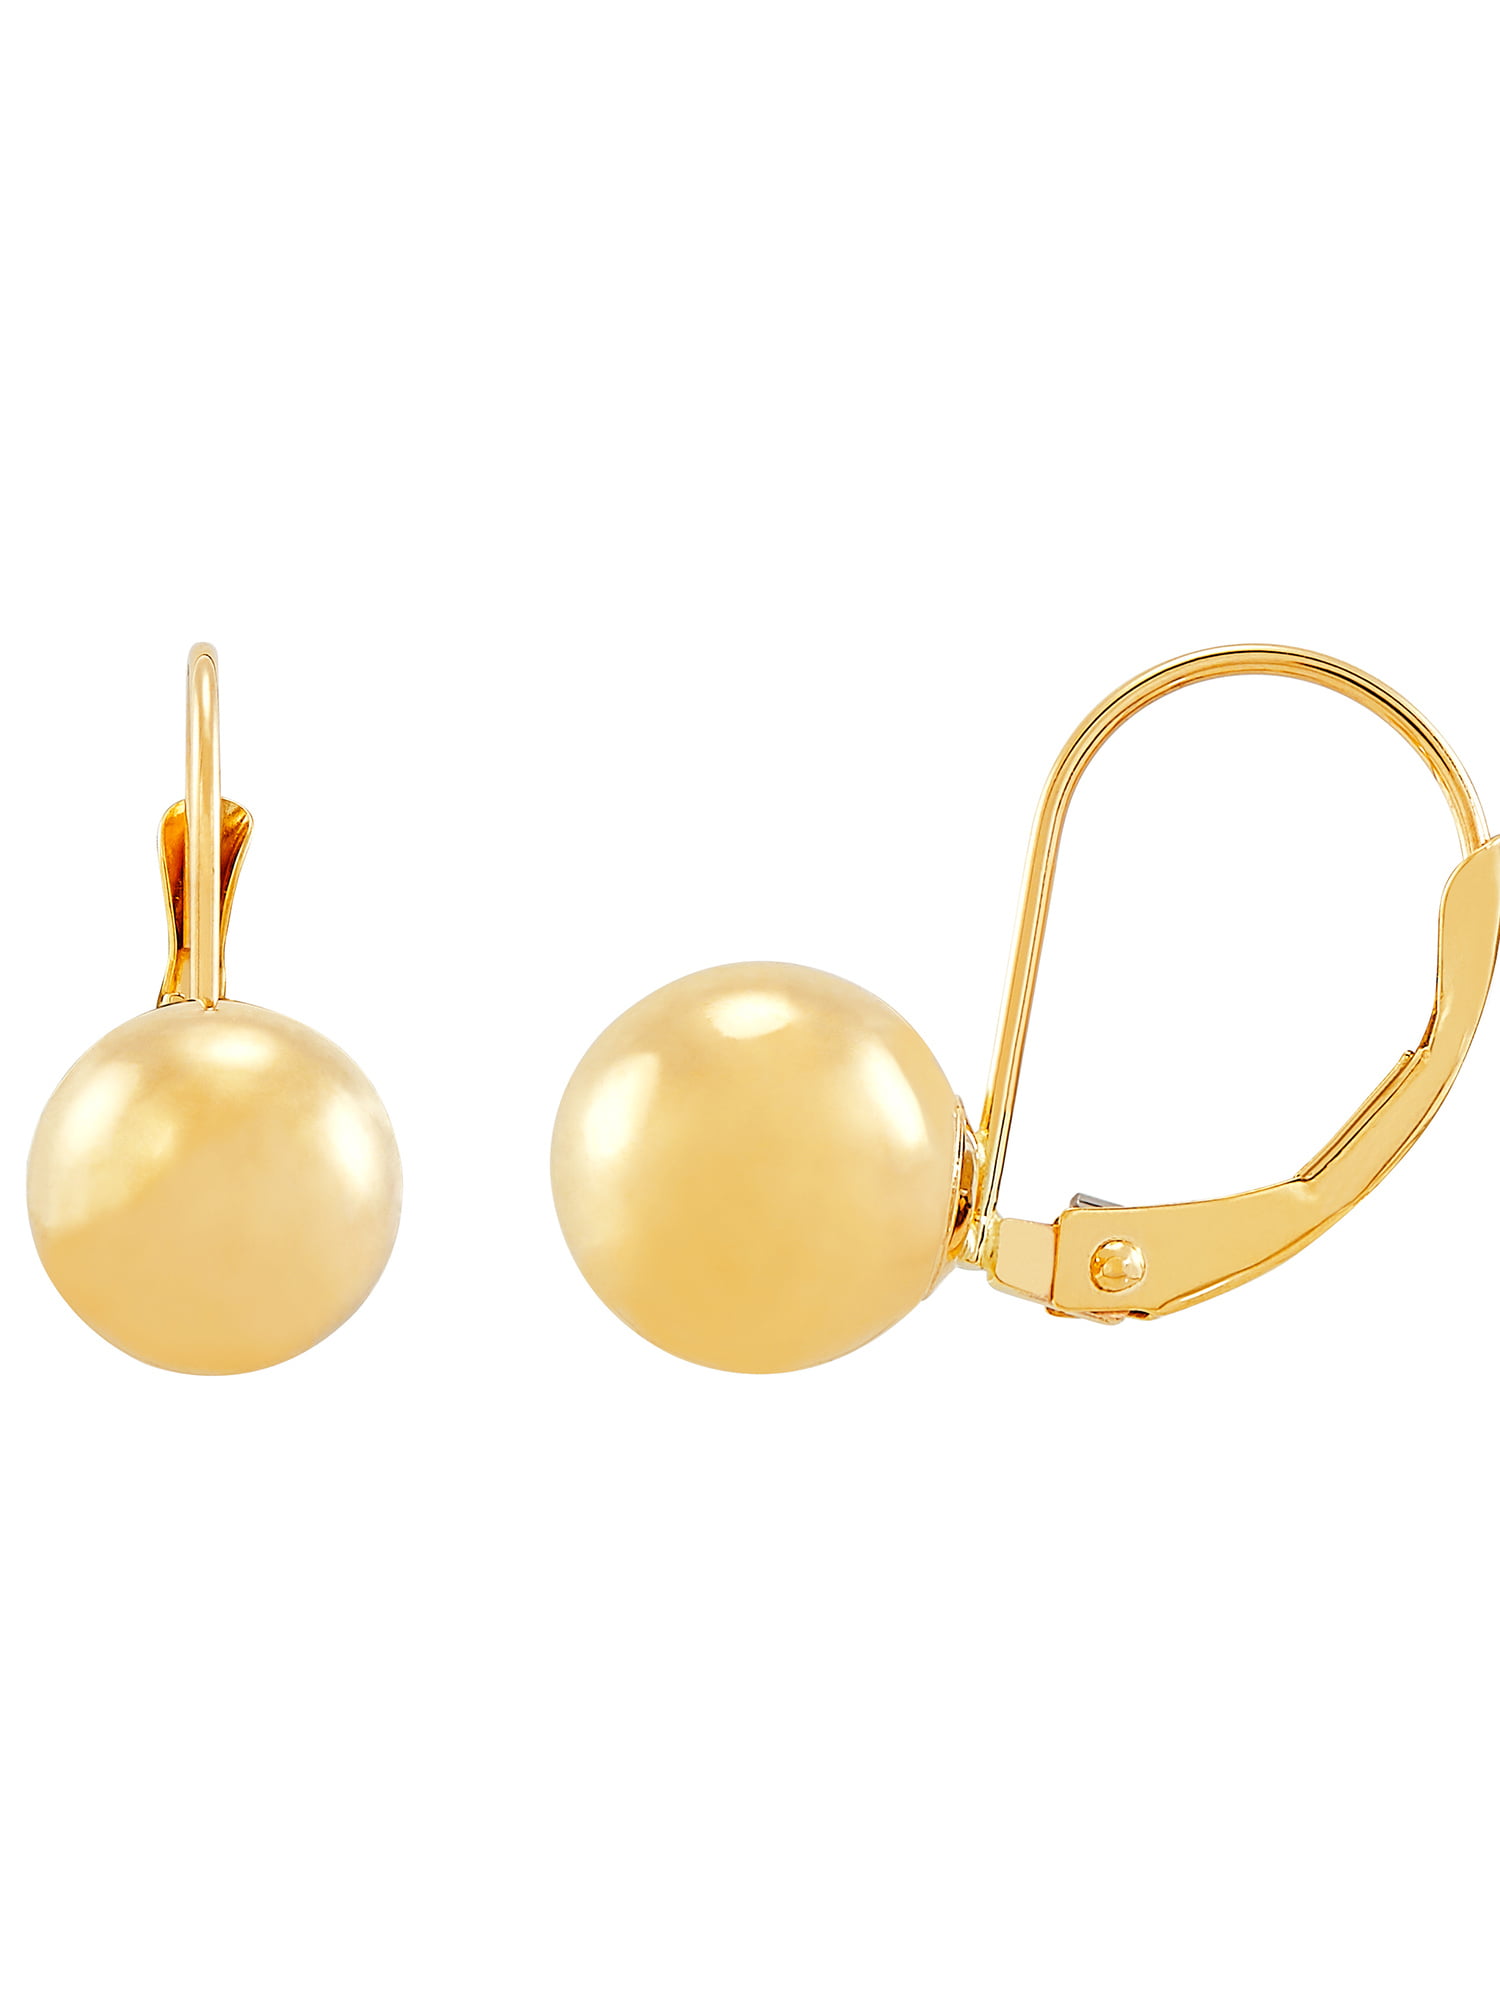 Light Yellow Acrylic Sphere Handmade Drop Earrings Hook Lever Back or Clip on